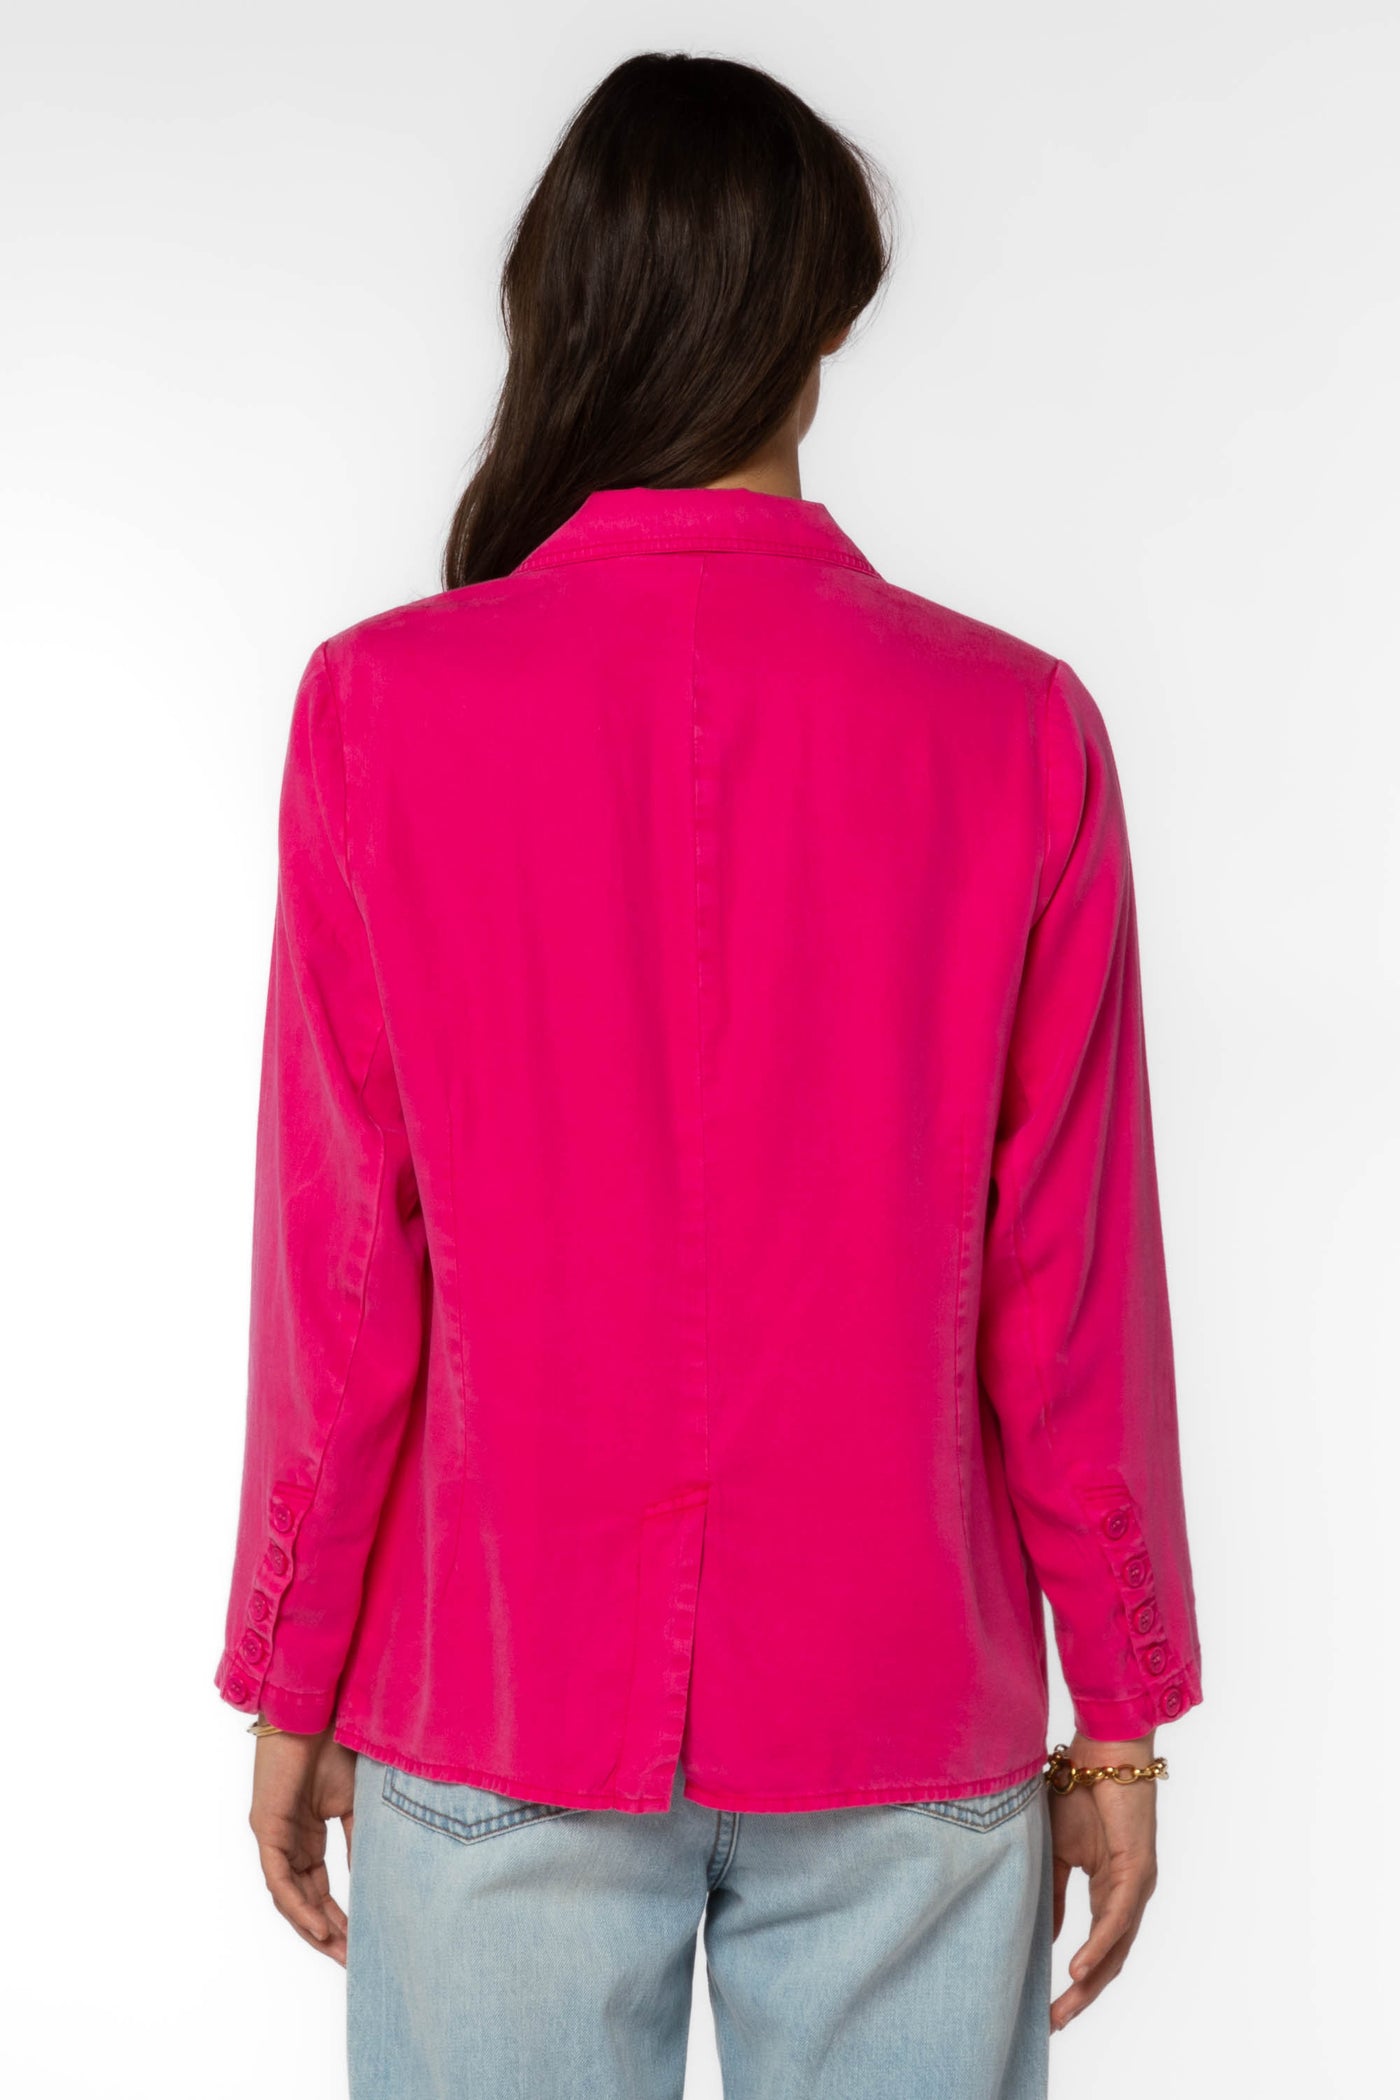 Patty Hot Pink Blazer - Jackets & Outerwear - Velvet Heart Clothing